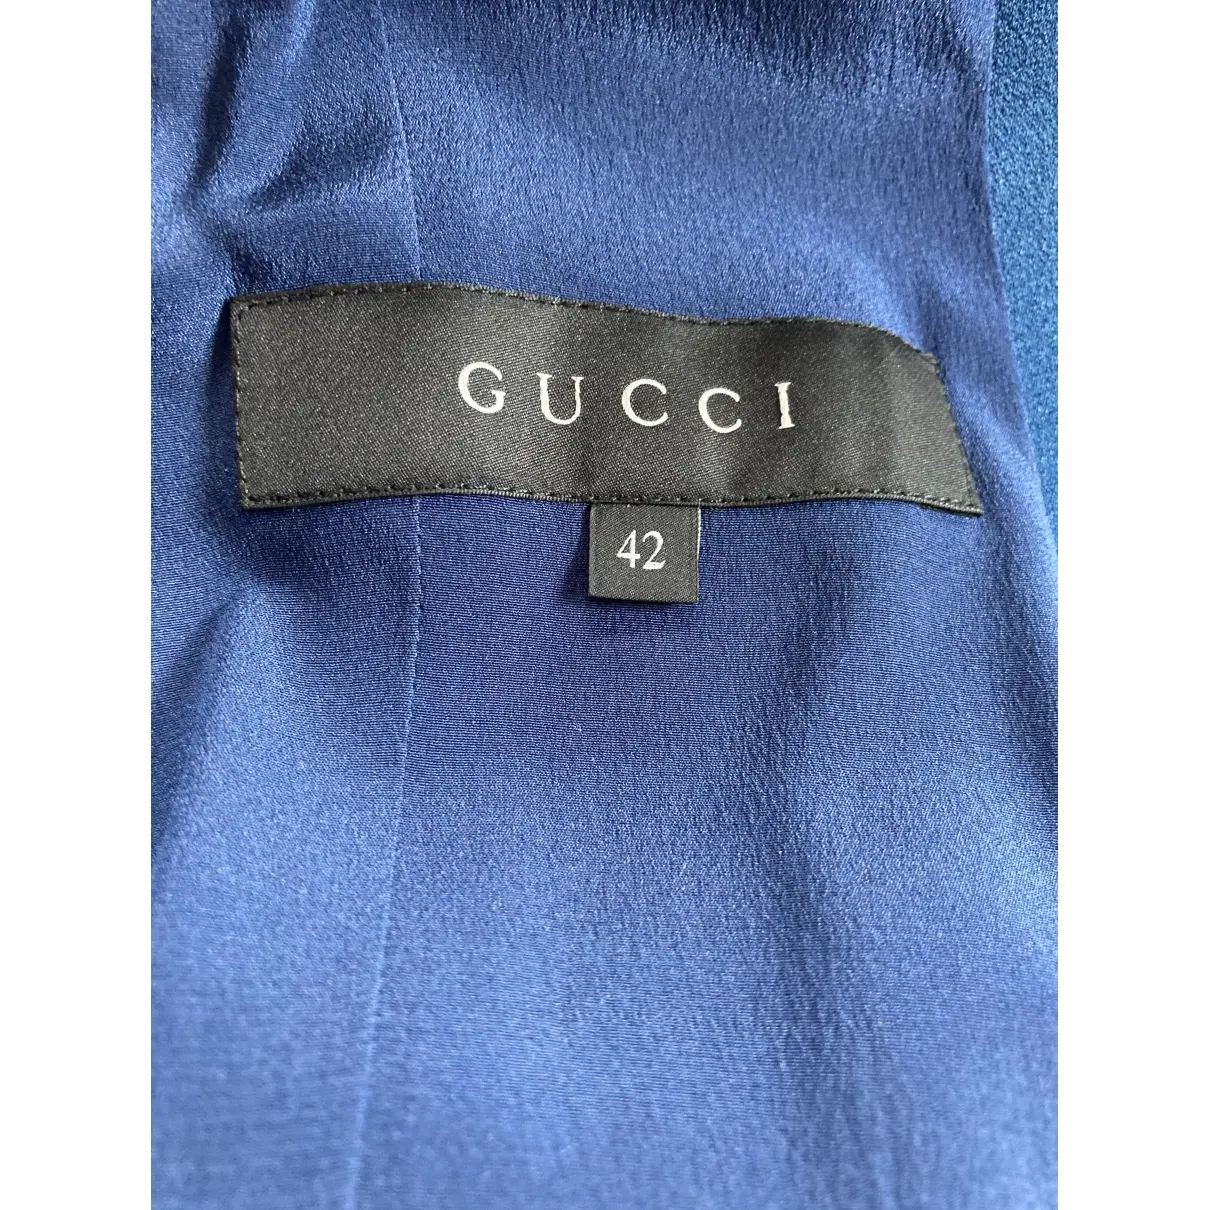 Buy Gucci Blue Viscose Jacket online